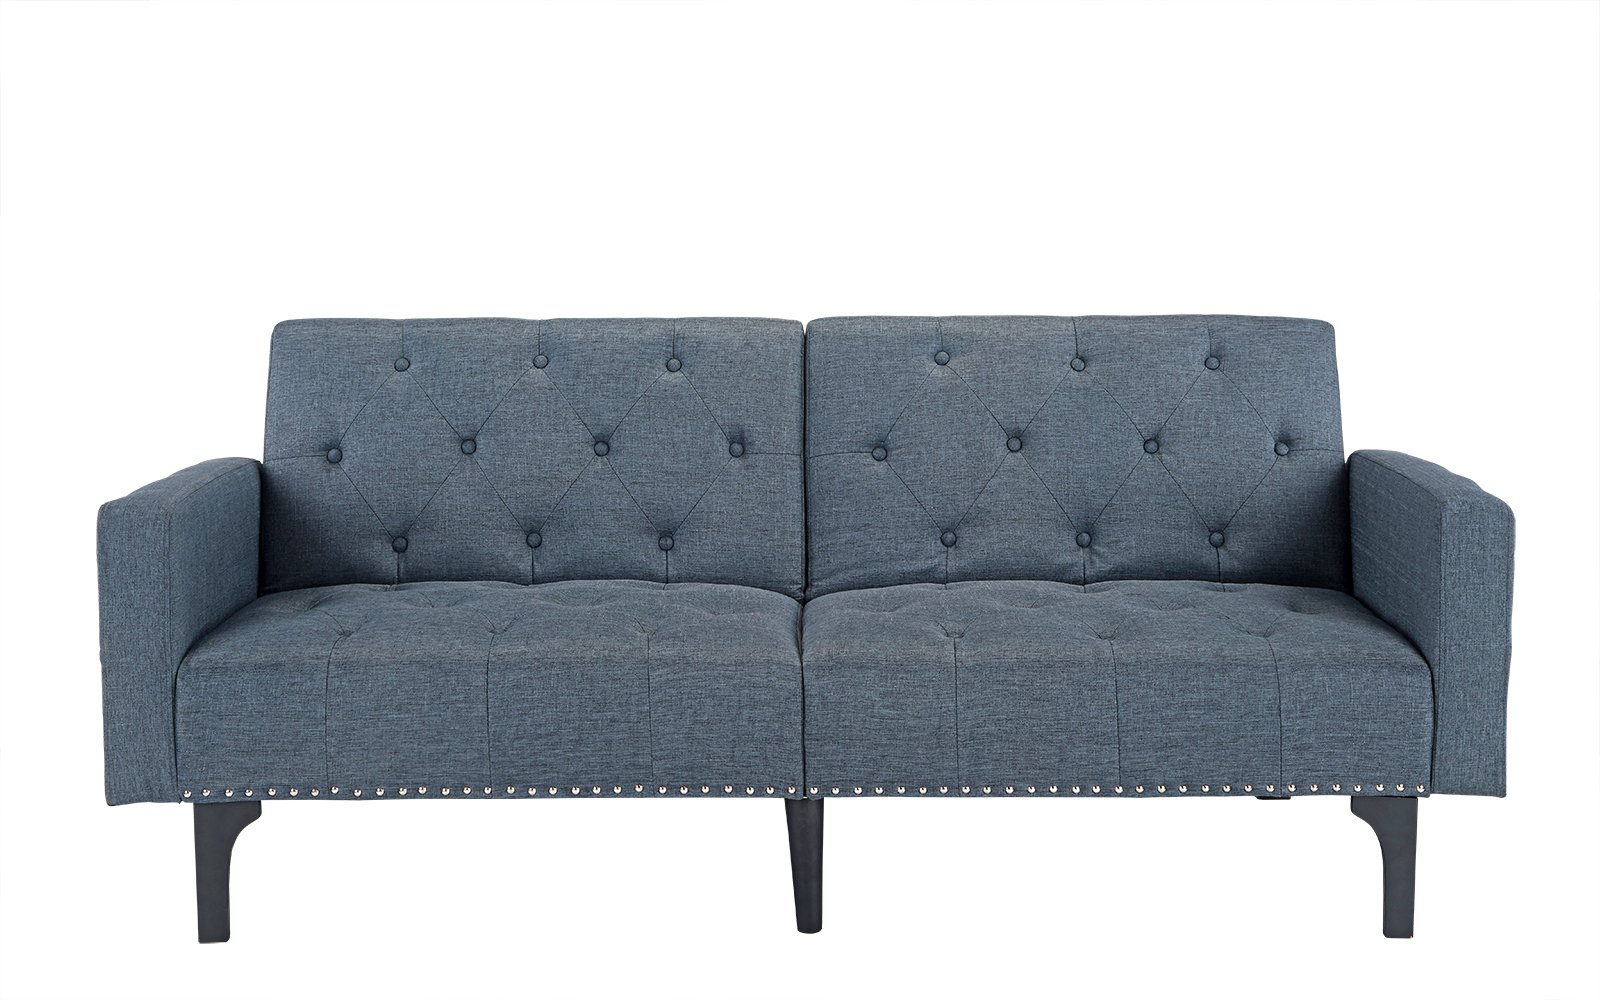 Modern Tufted Fabric Sleeper Sofa Bed with Nailhead Trim, Grey